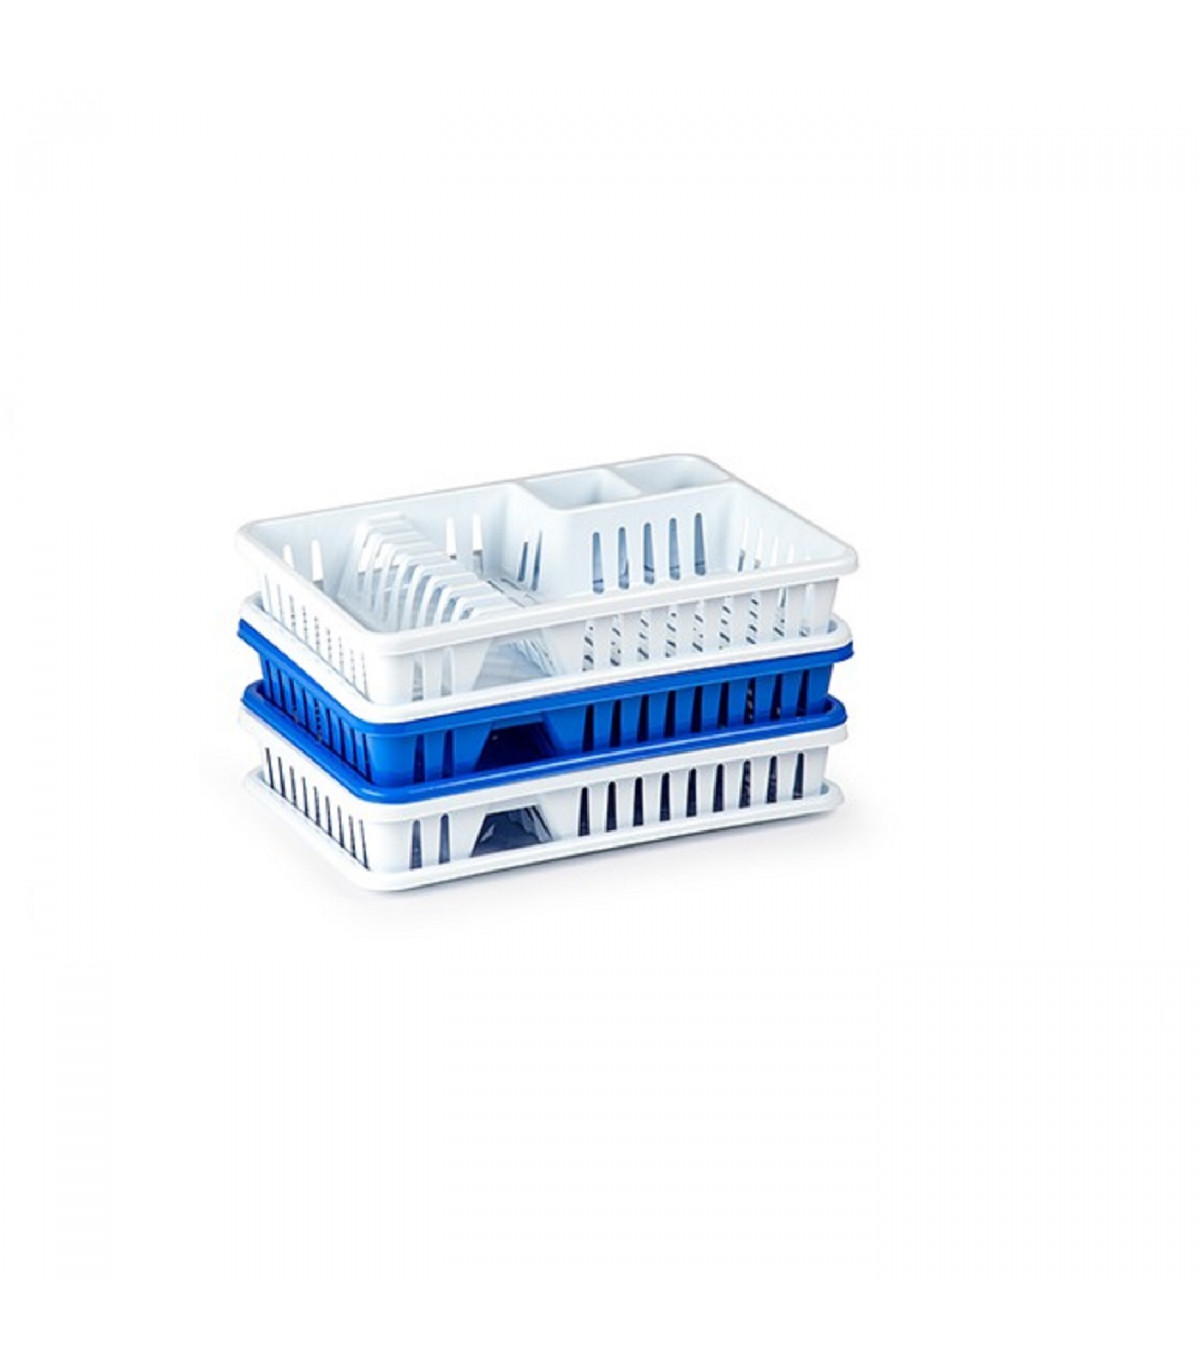 Tradineur - Escurreplatos blanco/azul plástico rectángular 45 x 29,7 x 8 cm